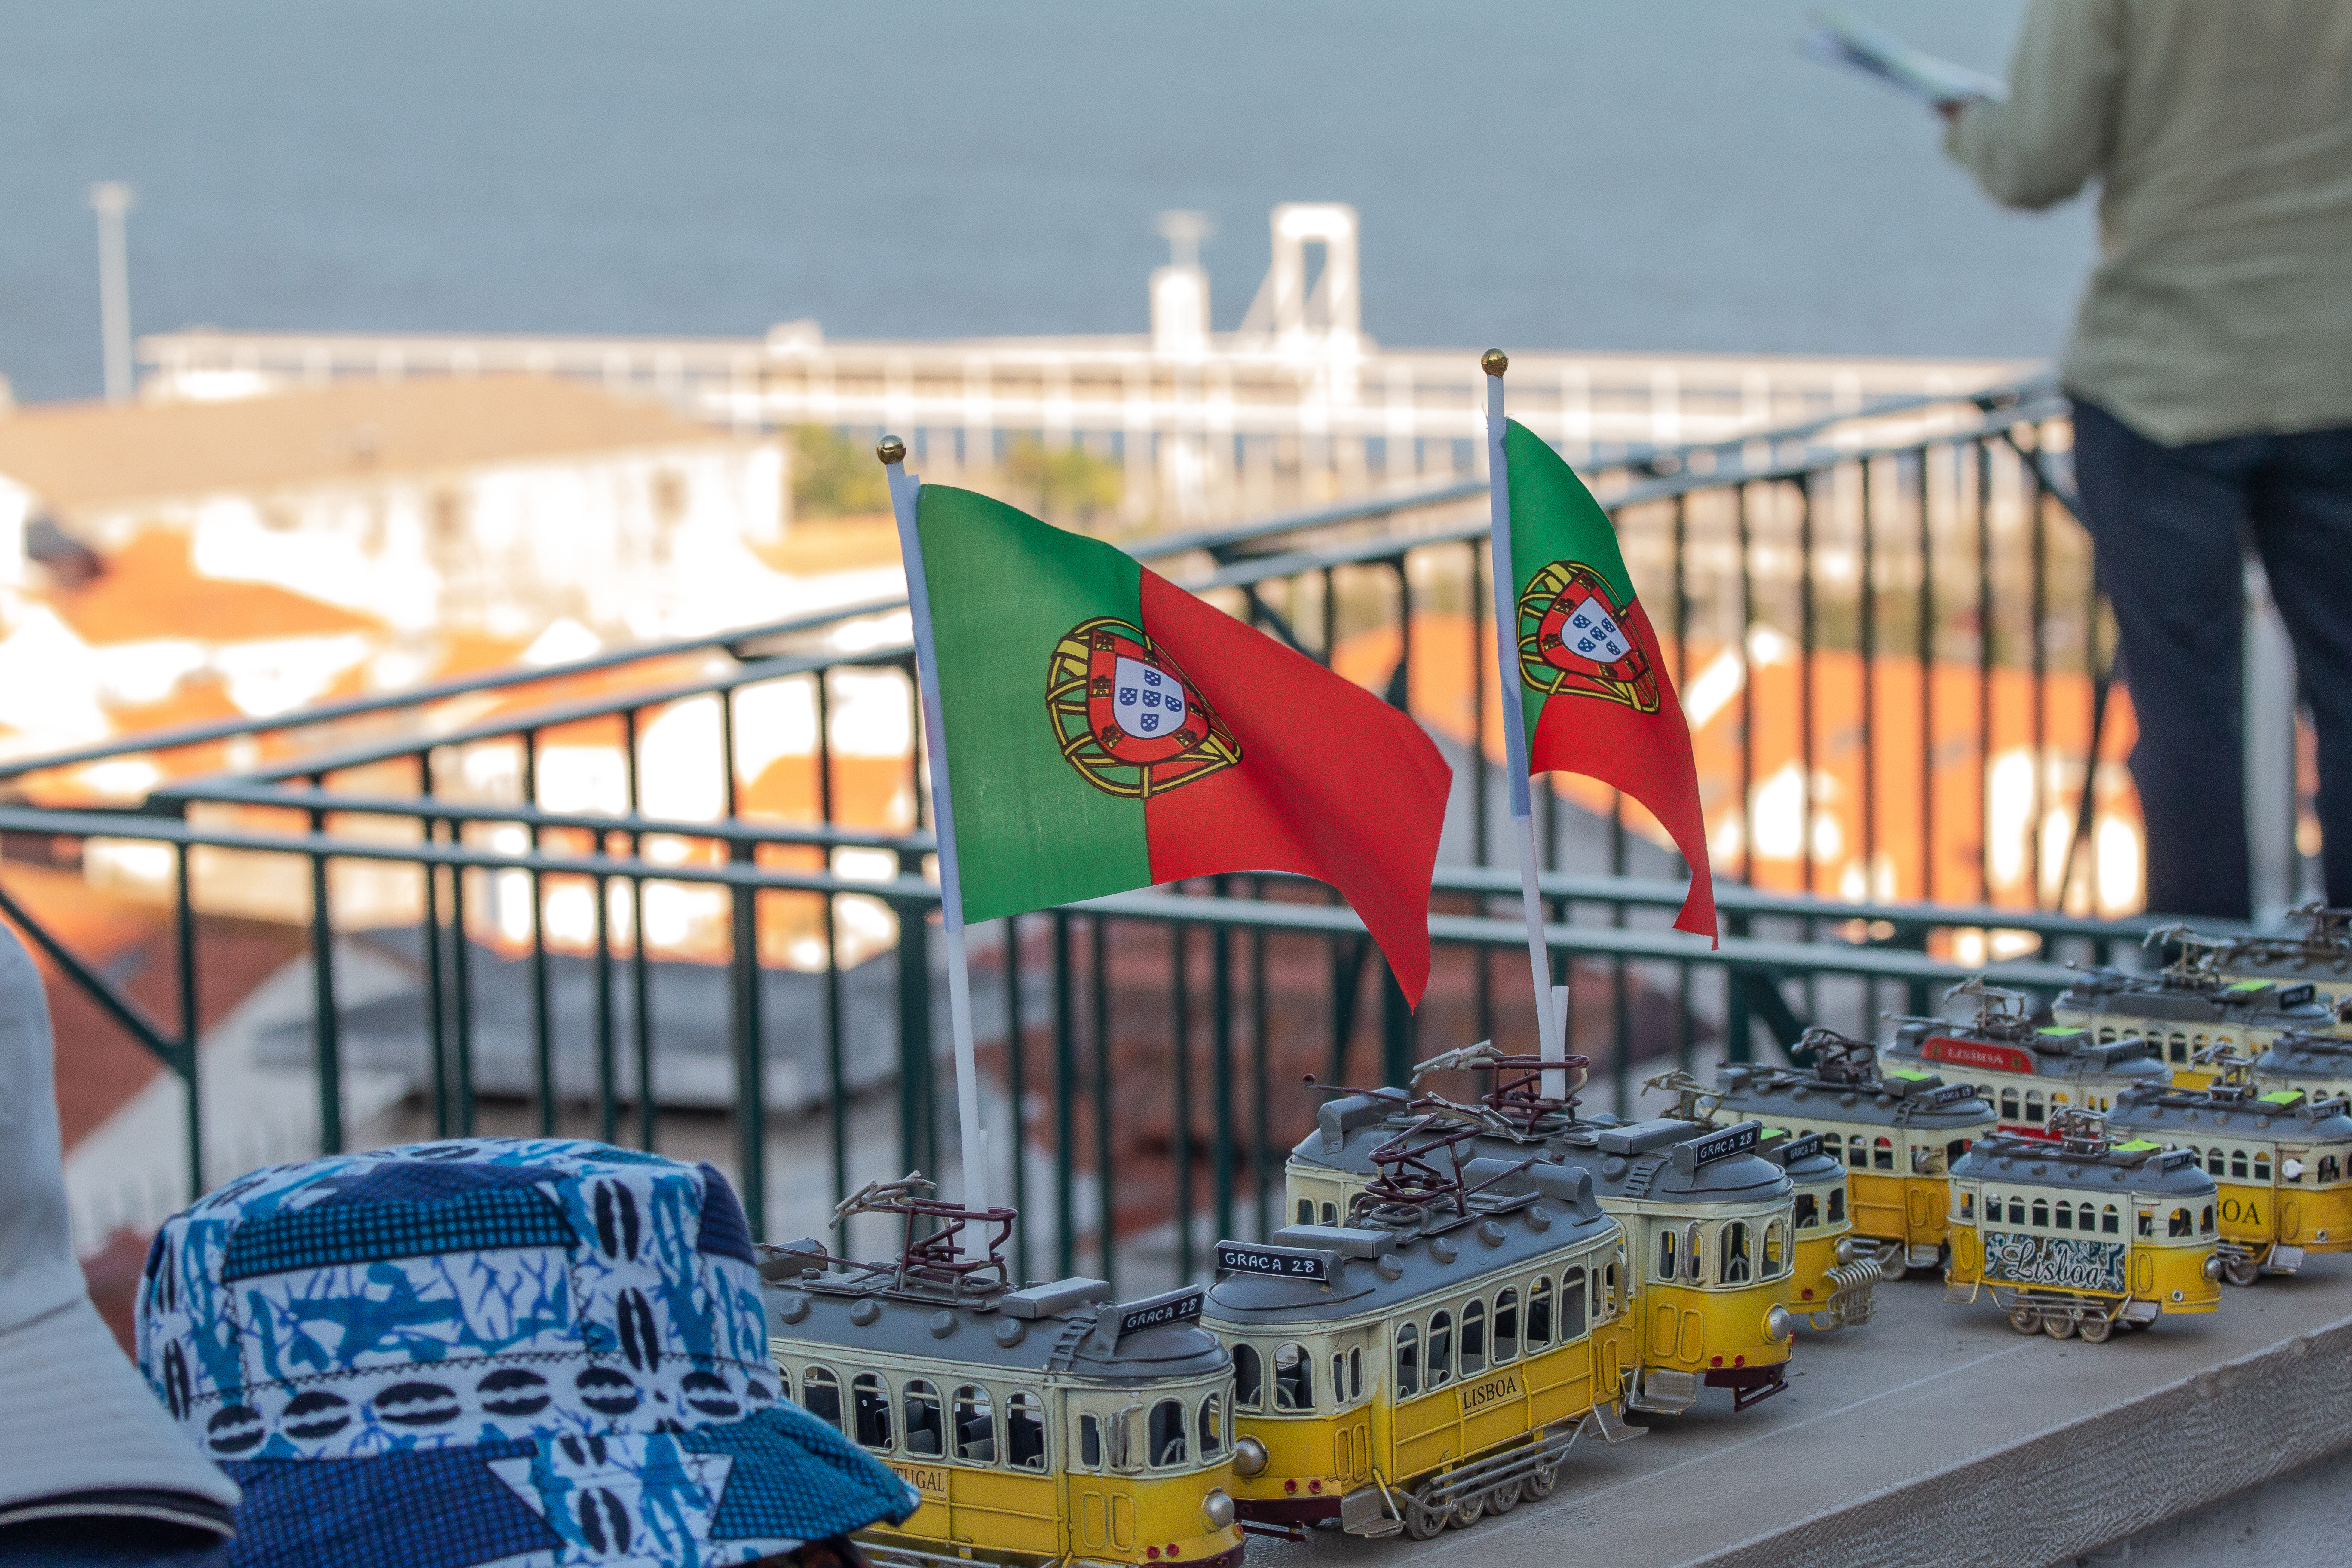 Lisbon tram miniatures and Portuguese flag – Miniaturas do eléctrico de Lisboa e bandeira Portuguesa
